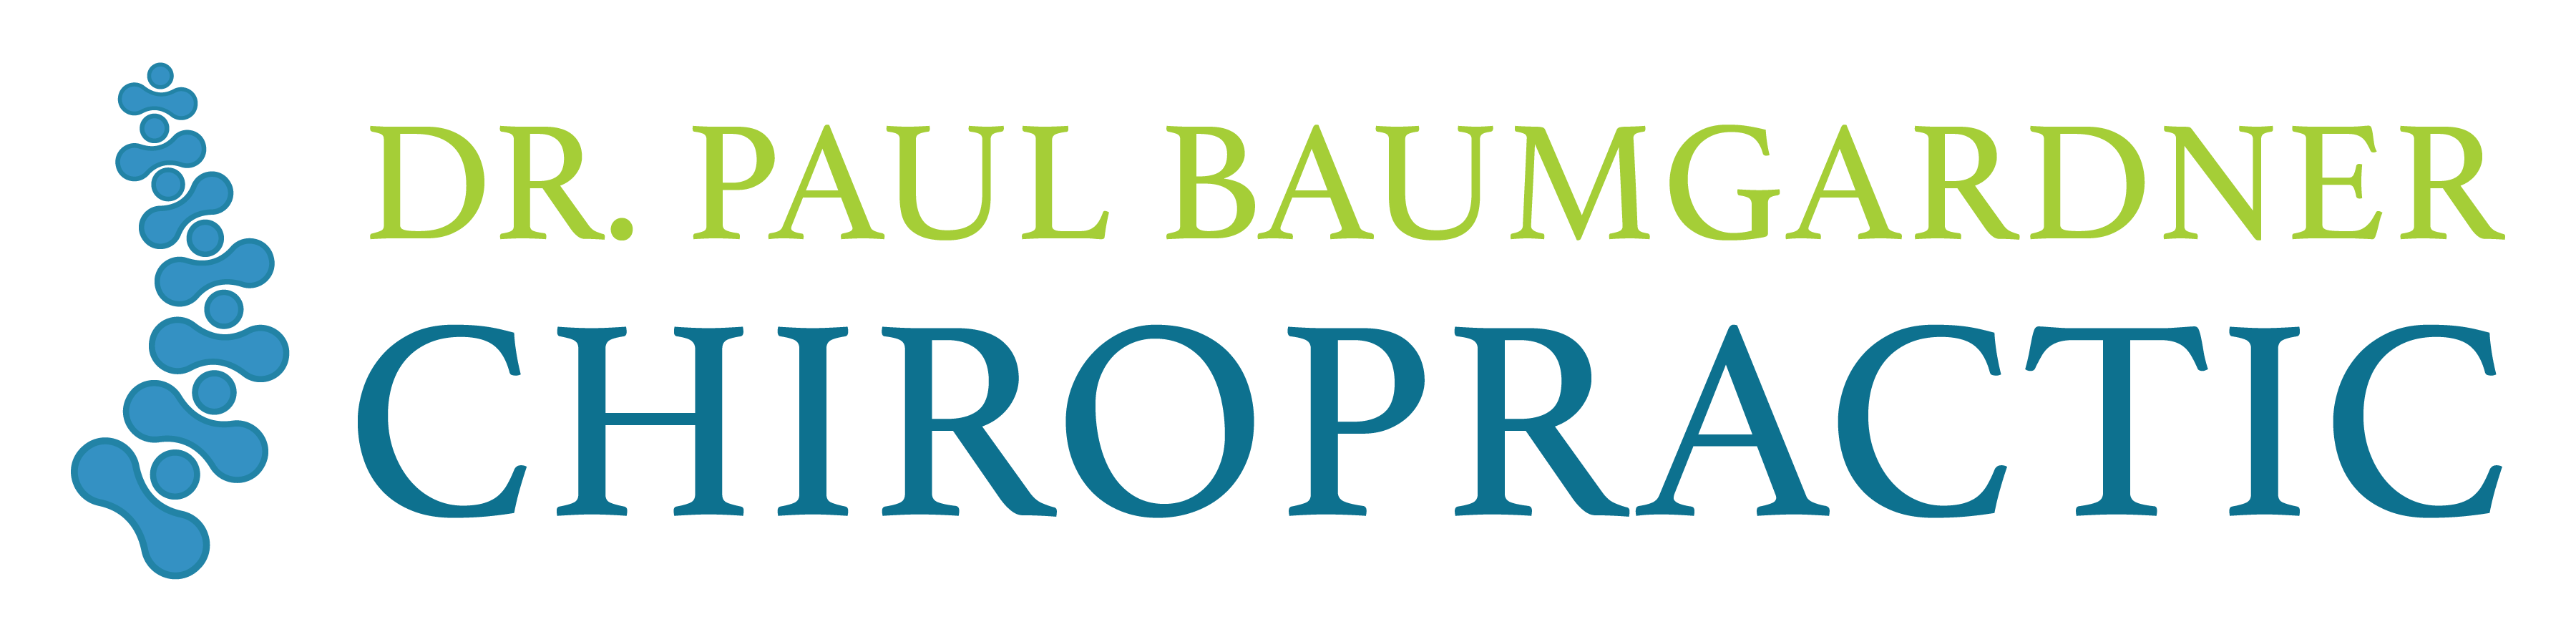 Dr. Paul Baumgardner Chiropractic Logo